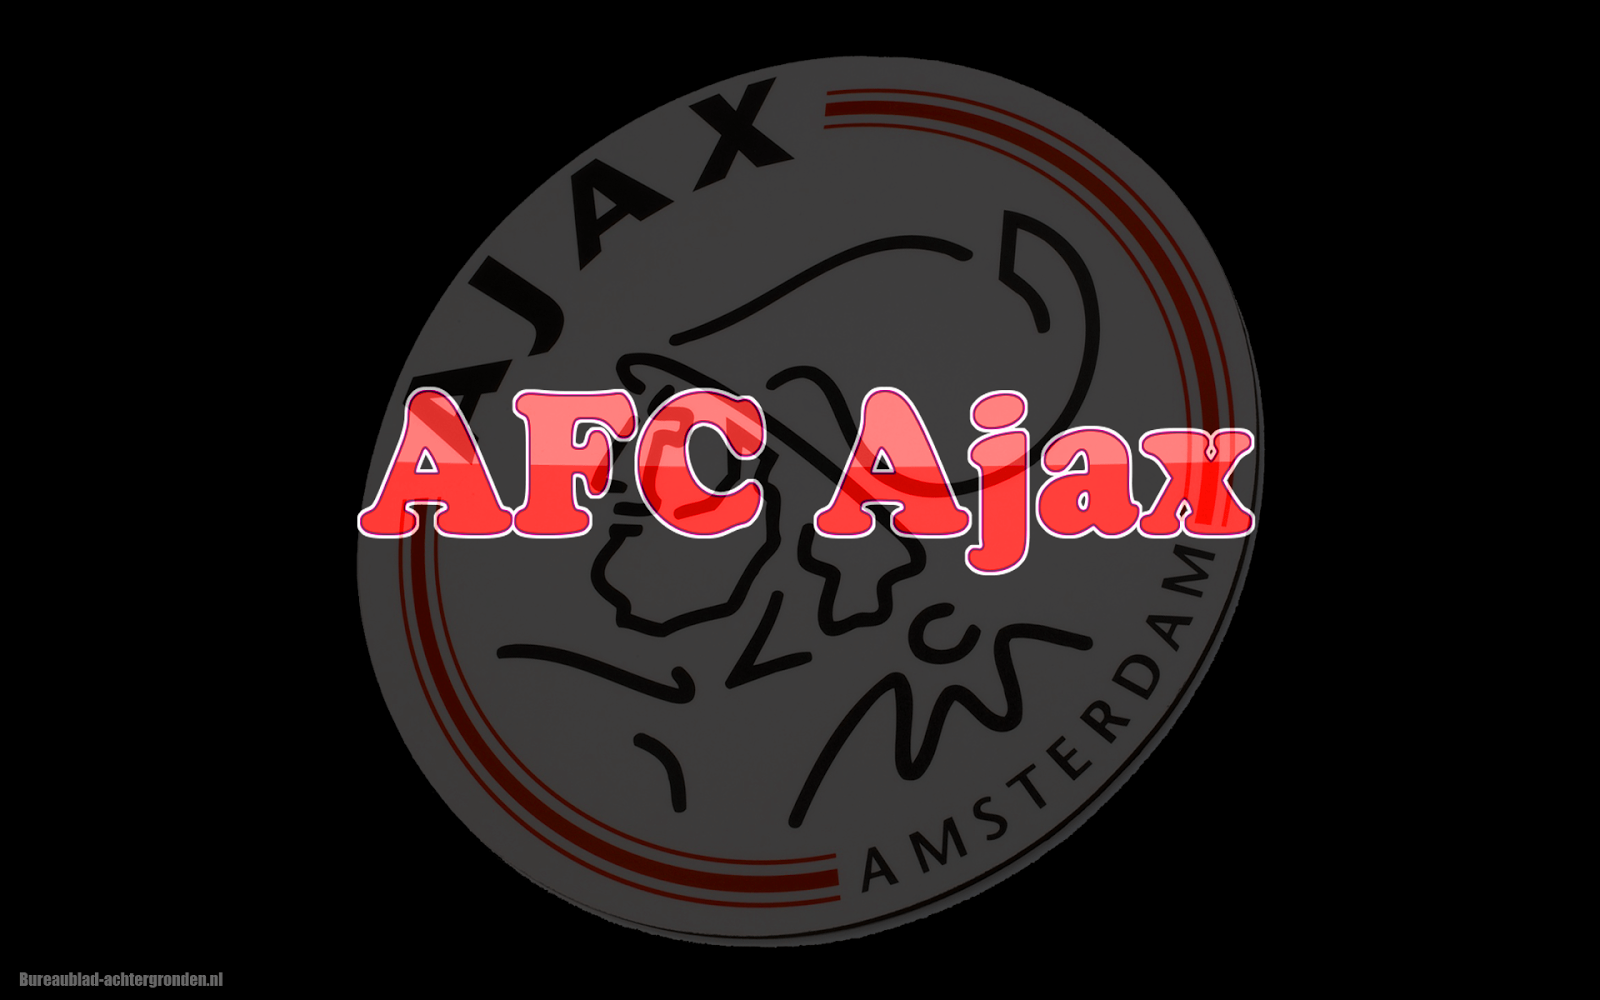 Mooie Ajax achtergrond met rode letters